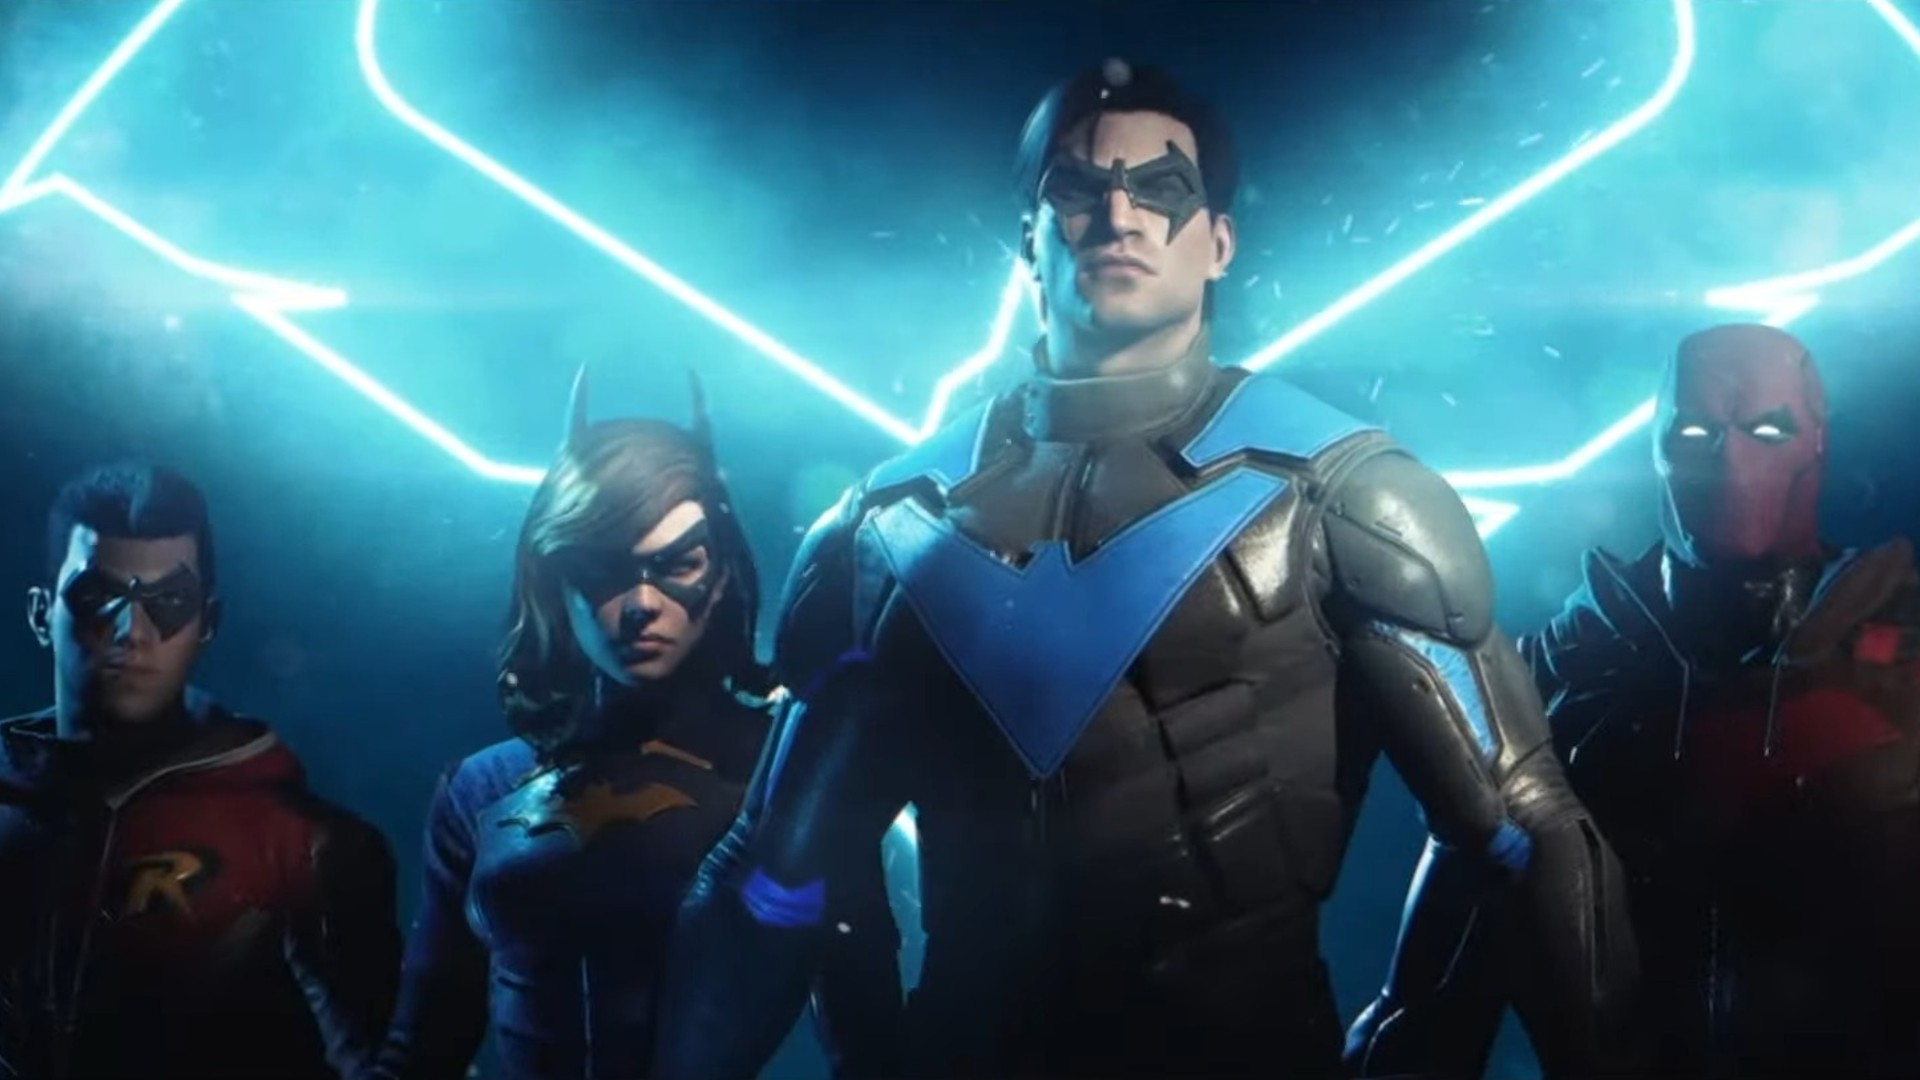 Gotham Knights Gets New Gameplay Video, Drops Last-Gen Versions